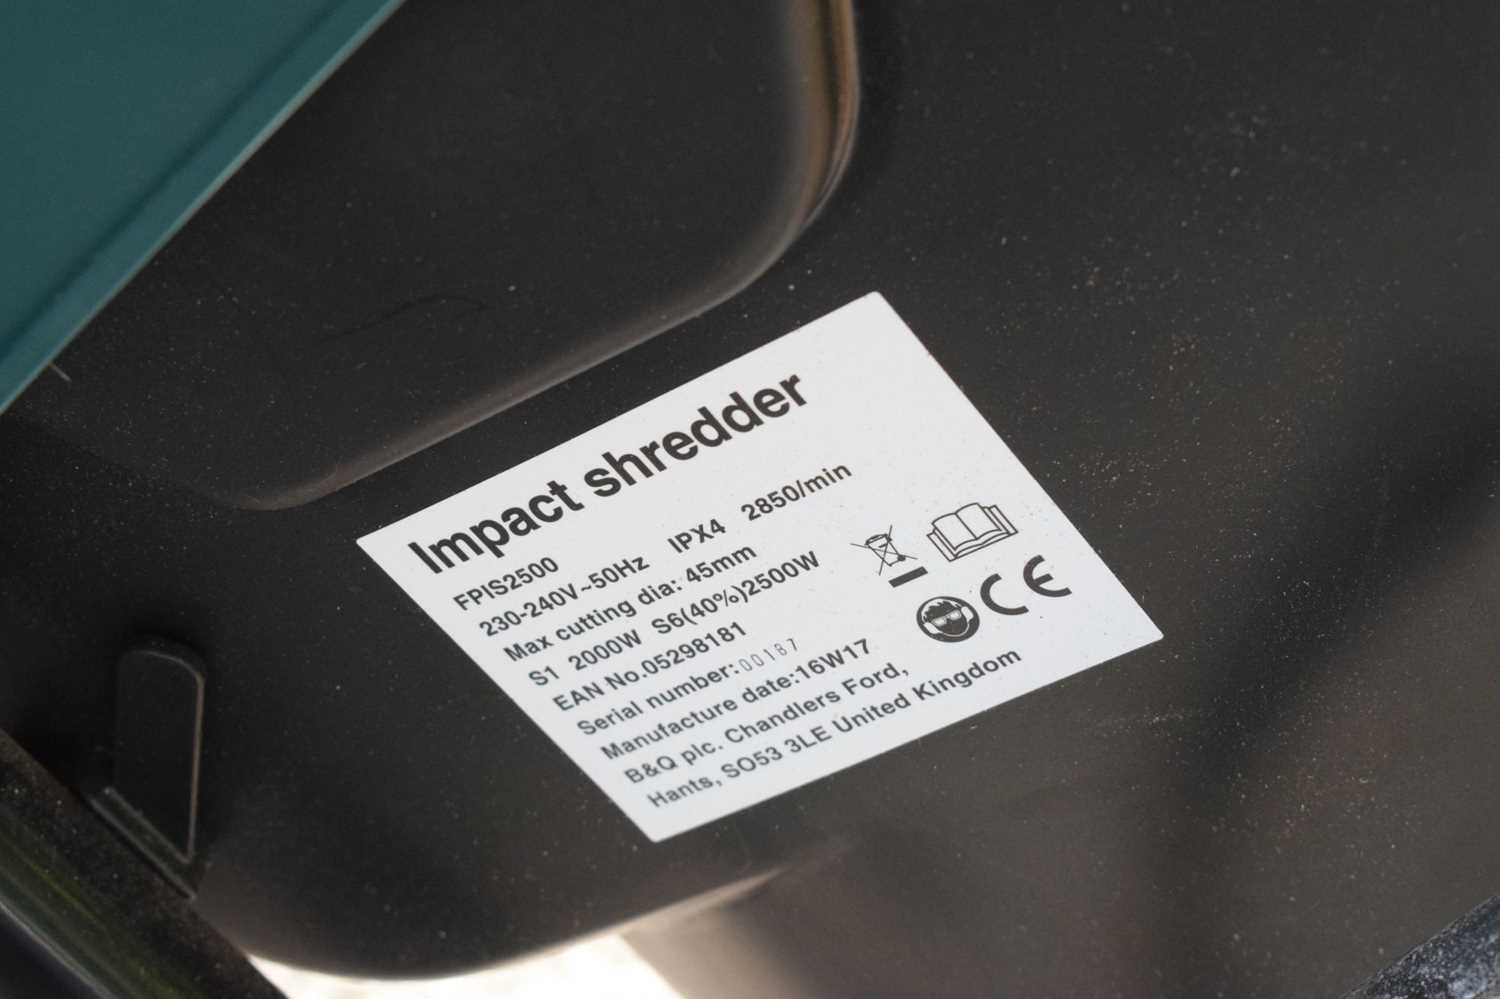 Garden electric impact shredder - Image 2 of 4